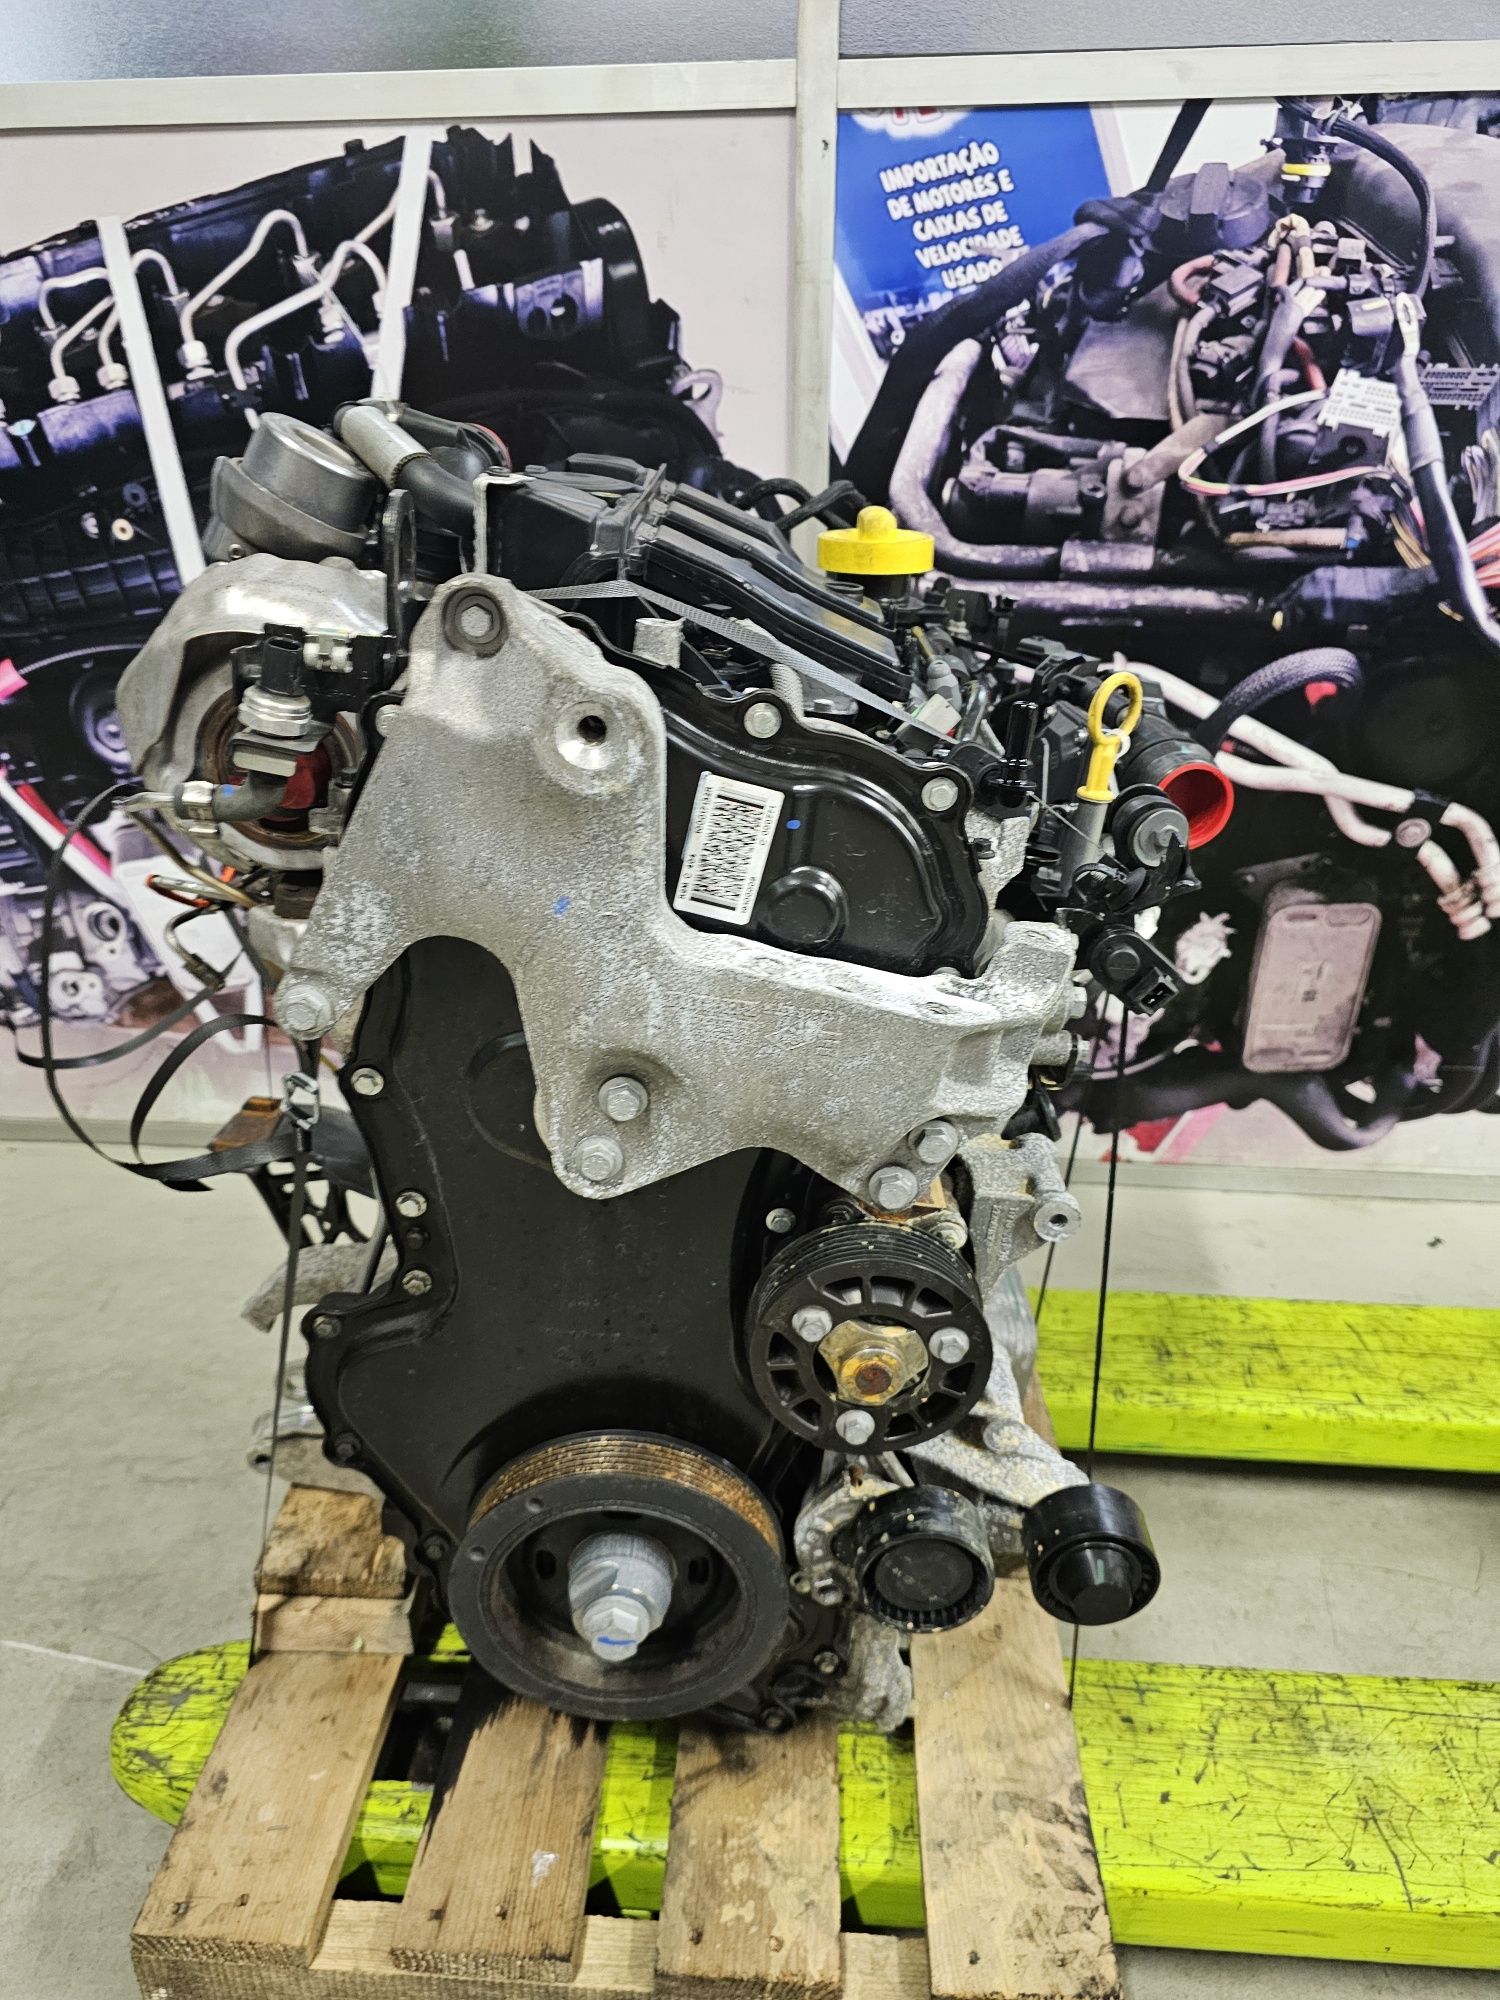 Motor Renault Scenic 1.6 DCI 2014, ref R9M 404